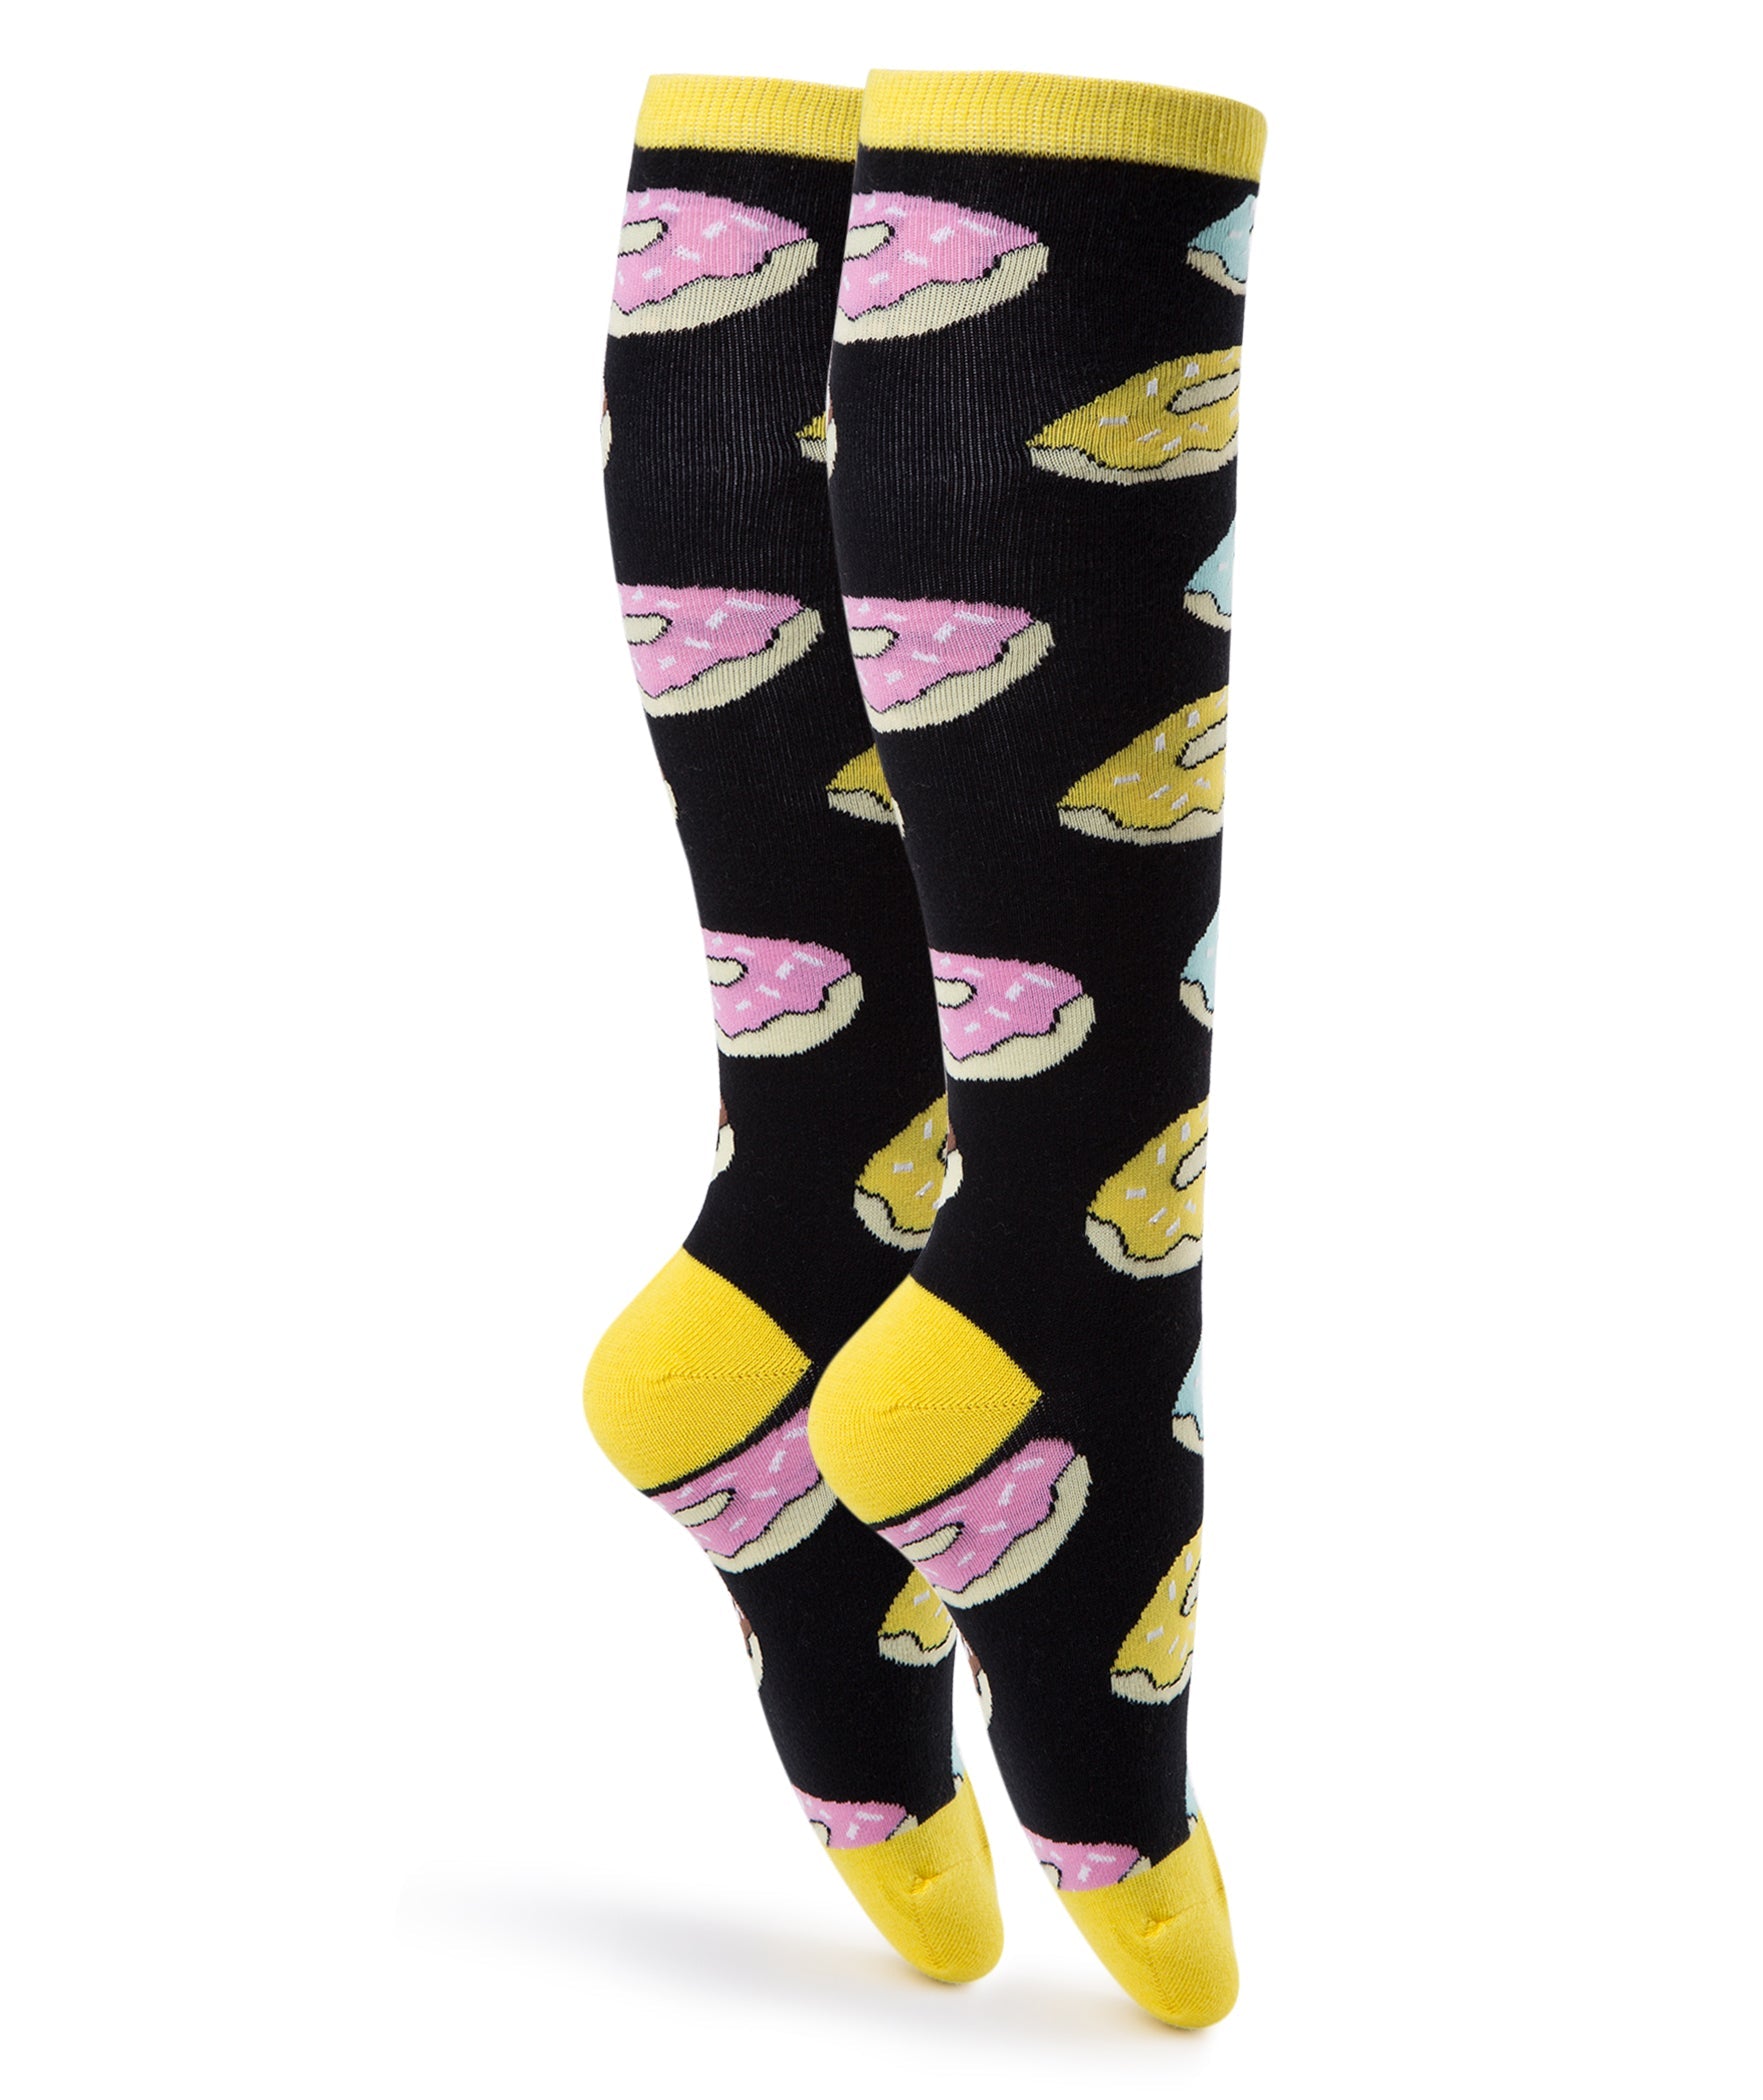 donut-magic-womens-knee-high-socks-2-oooh-yeah-socks